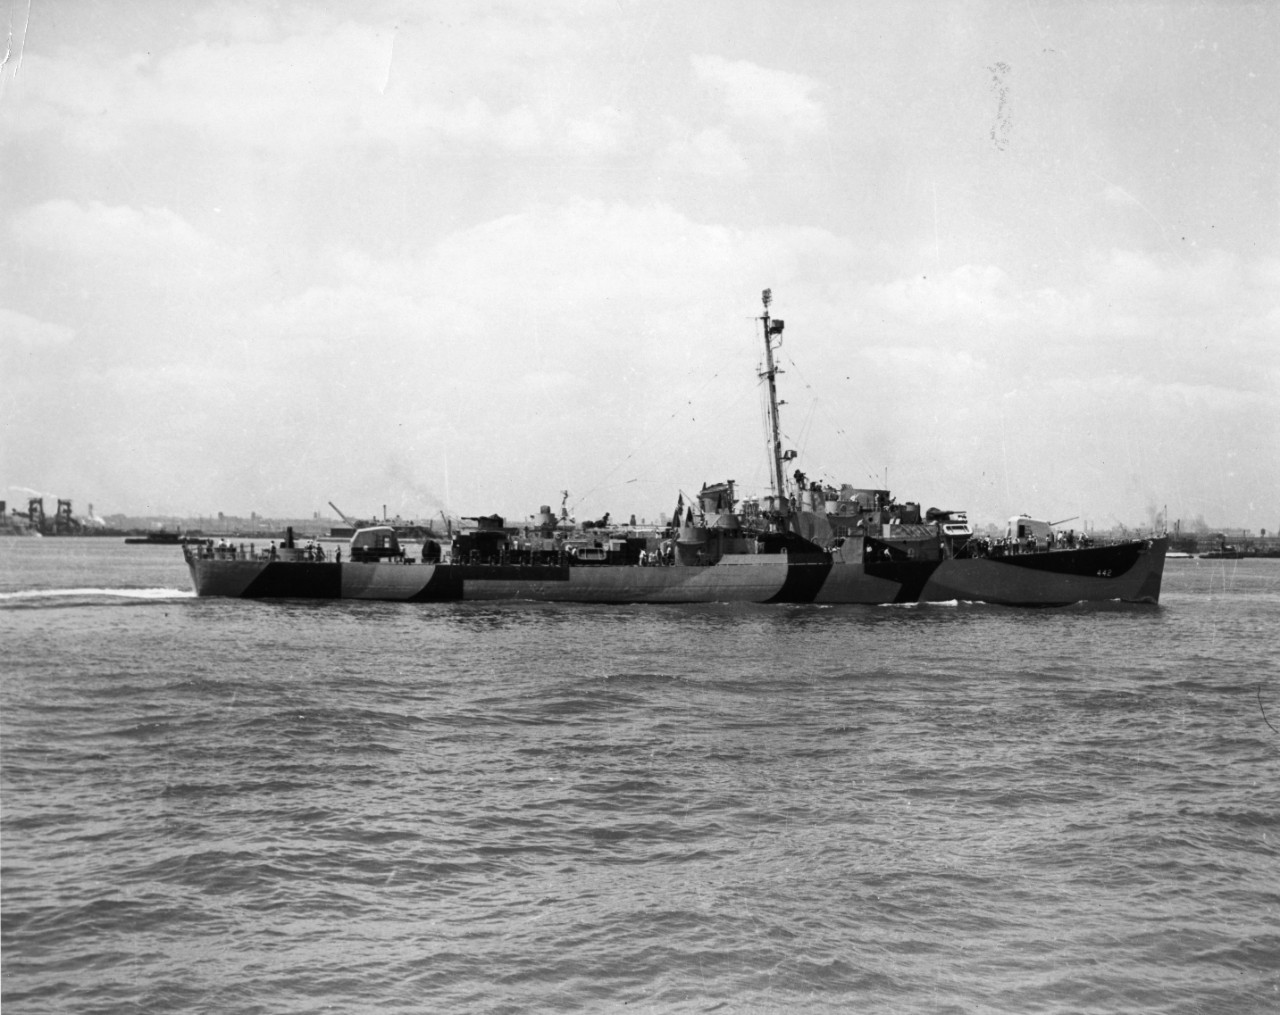 Starboard broadside view of destroyer escort USS Ulvert M. Moore (DE-442) underway, hull painted camouflage.